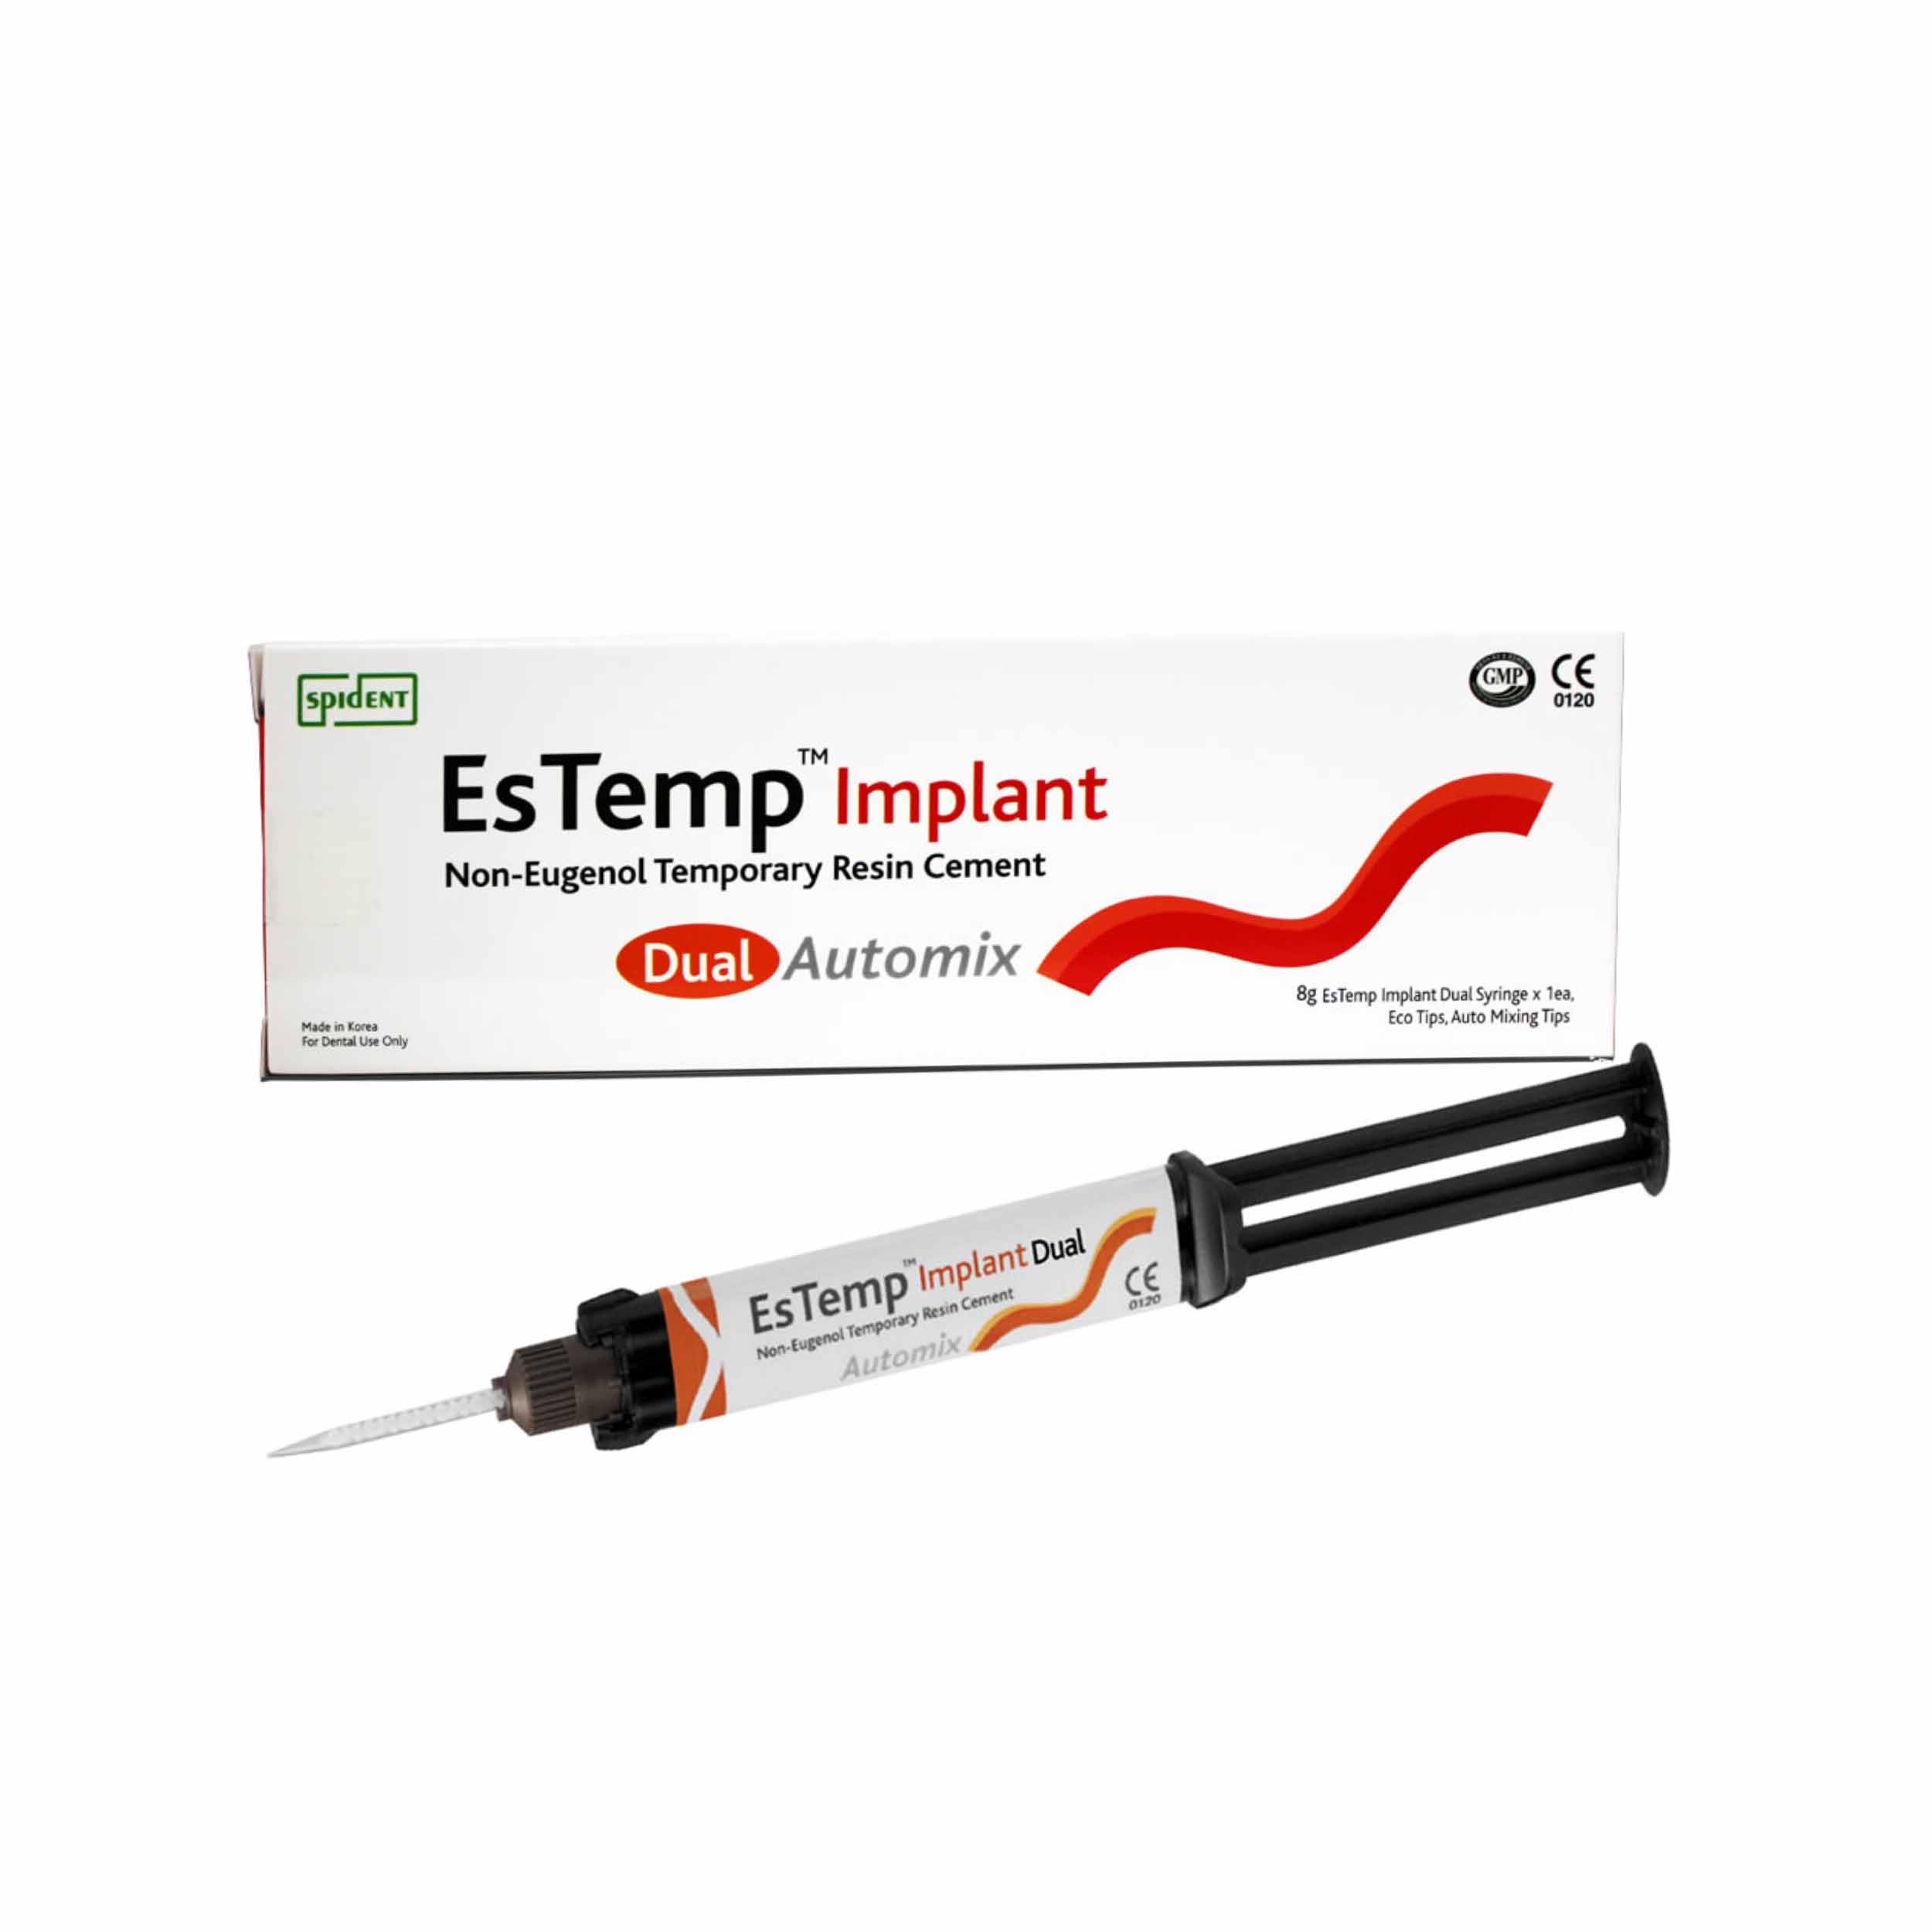 Spident EsTemp Implant (Temporary Resin Cement)